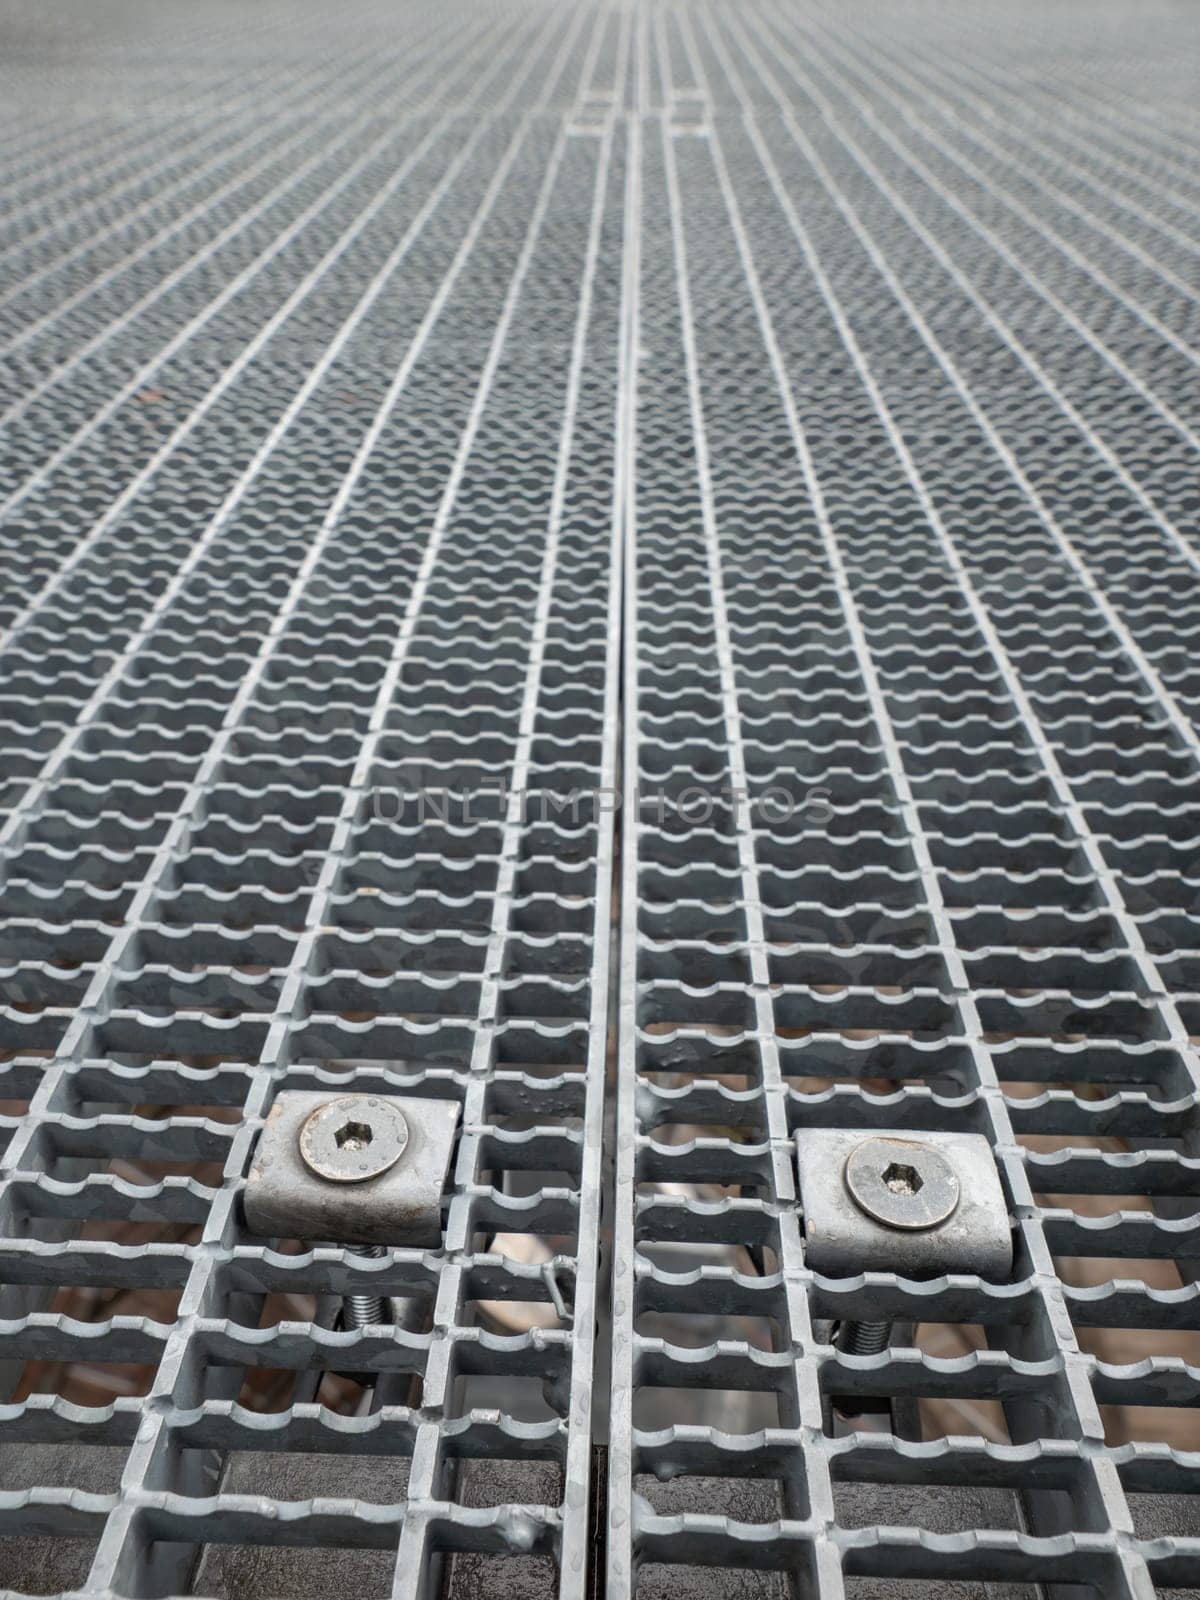 Gray grille transparent viewing platform construction by rdonar2